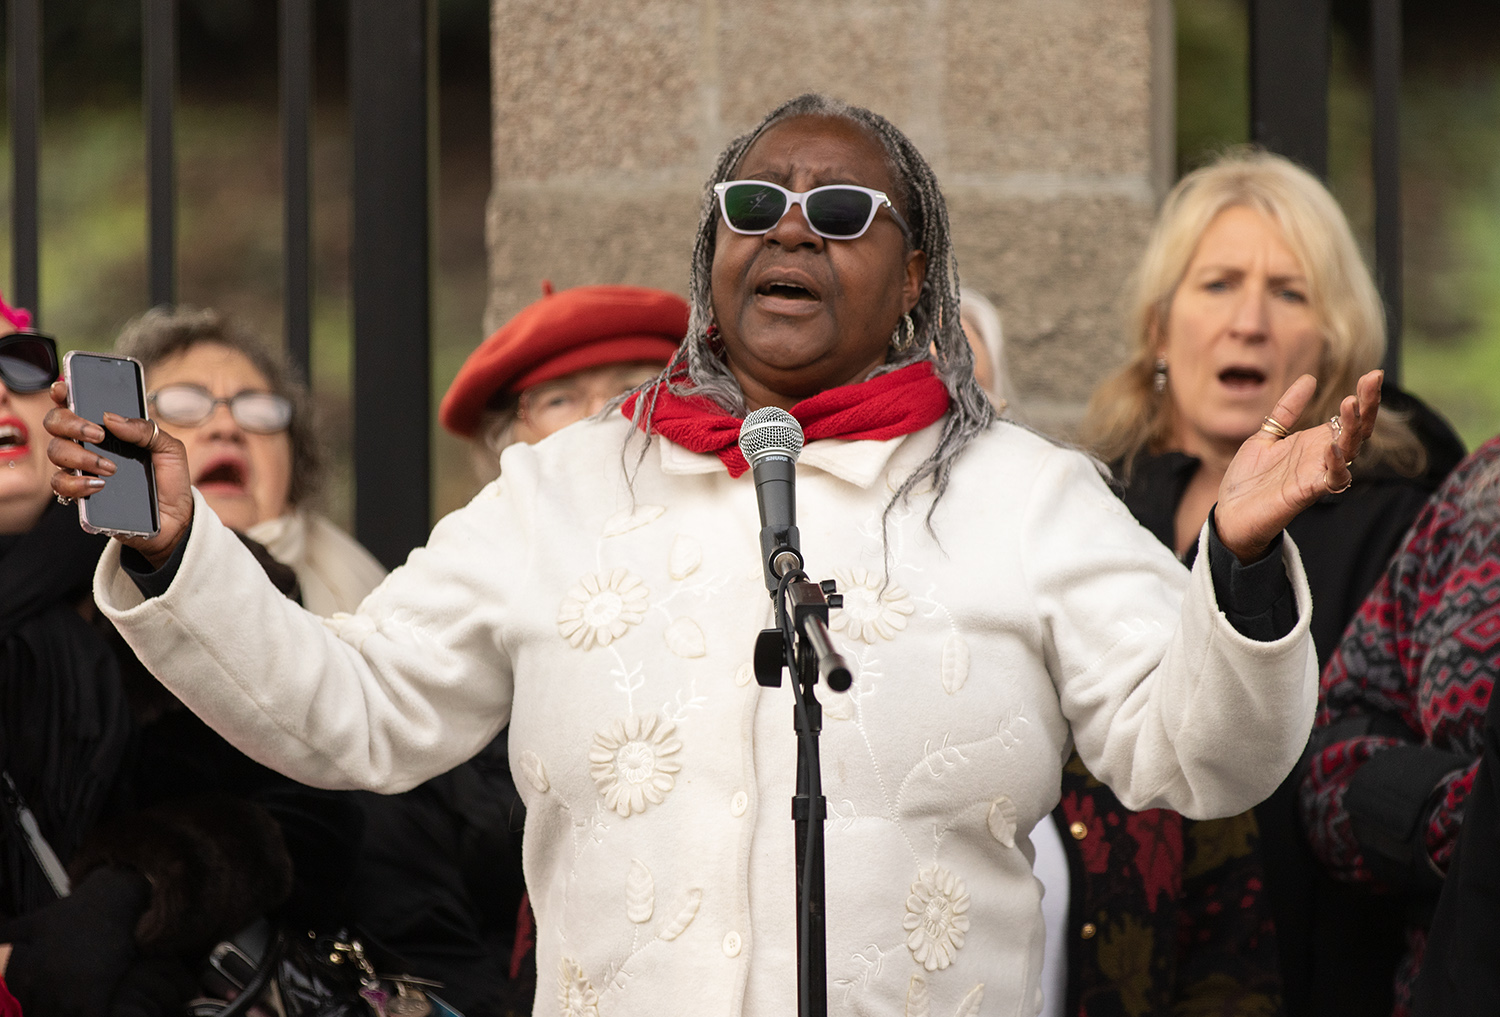  MLK 2019 Community Choir leader Kathy Vrzak leads singers through “America the Beautiful” during a Martin Luther King Jr. rally outside Autzen Stadium Monday, Jan. 21, 2019, in Eugene. 